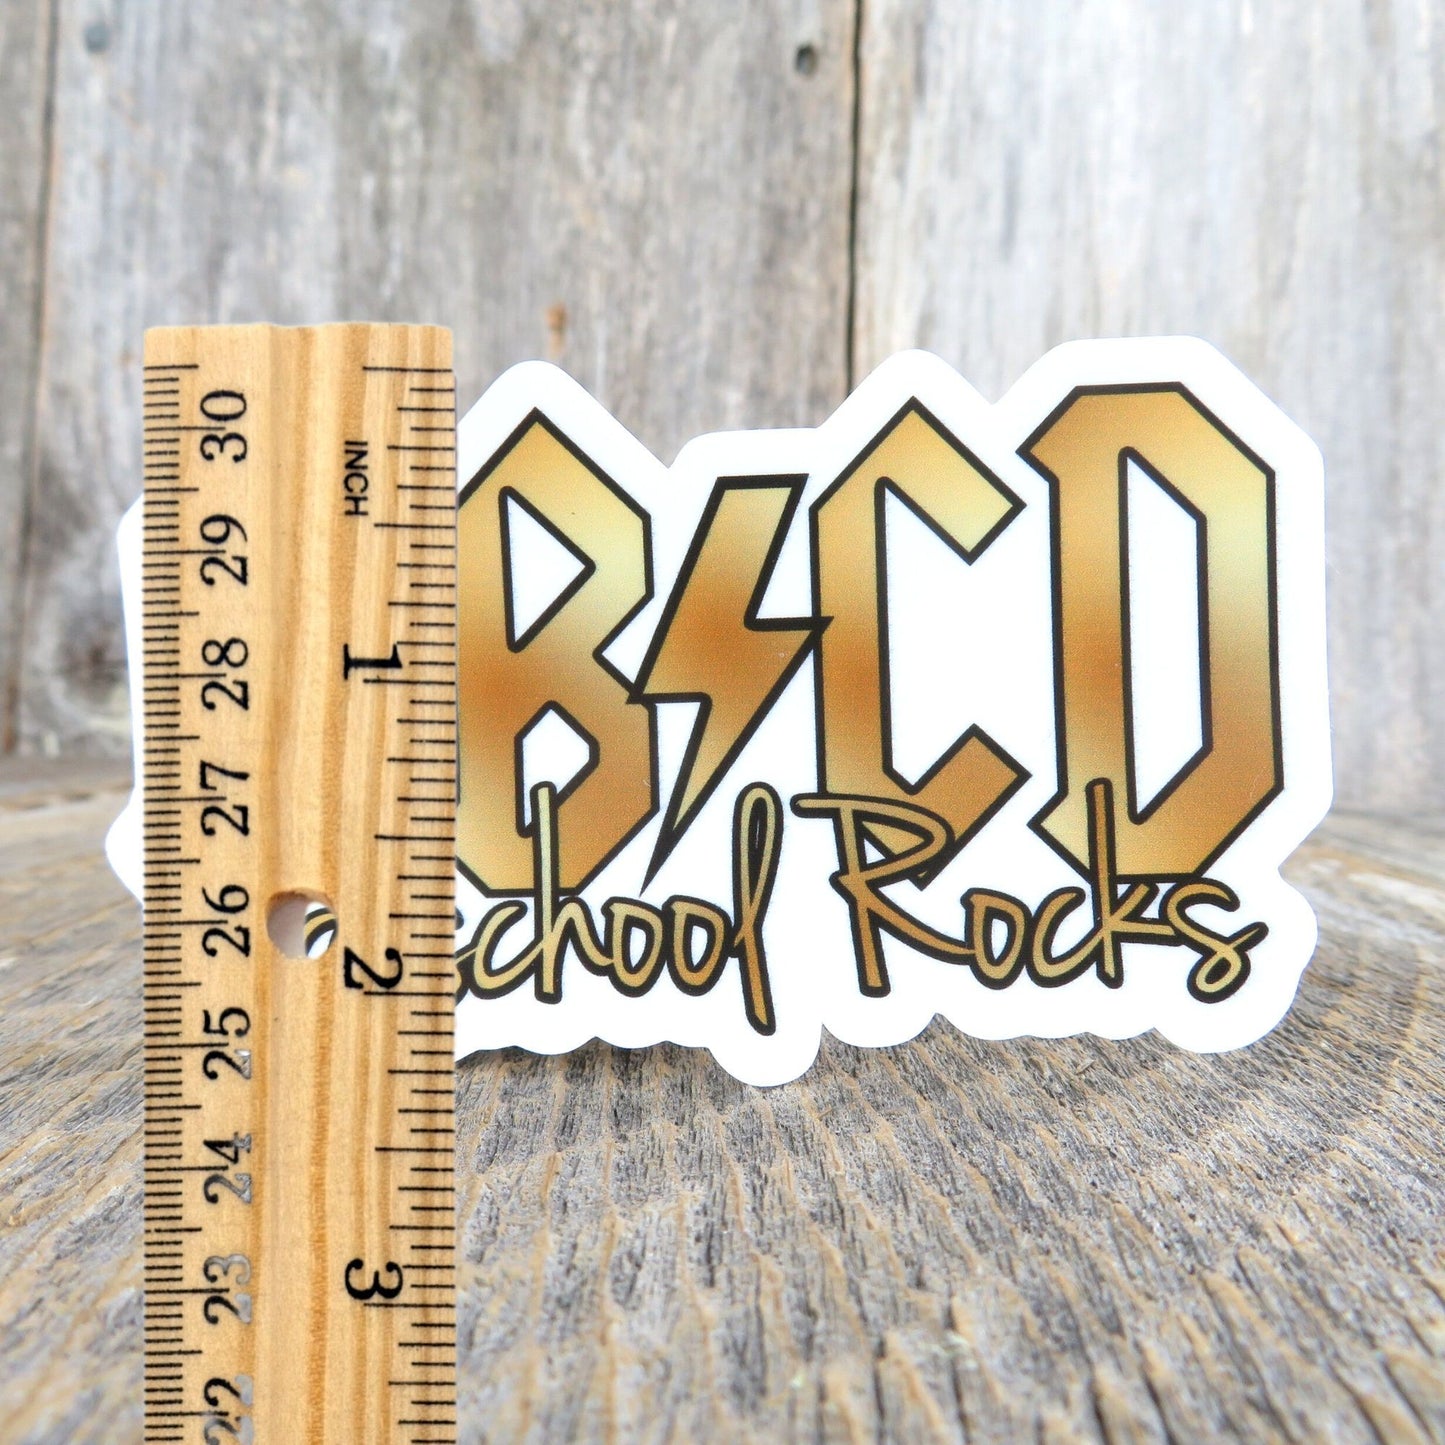 AB CD Preschool Rocks Sticker Cool Rock and Roll Teacher School